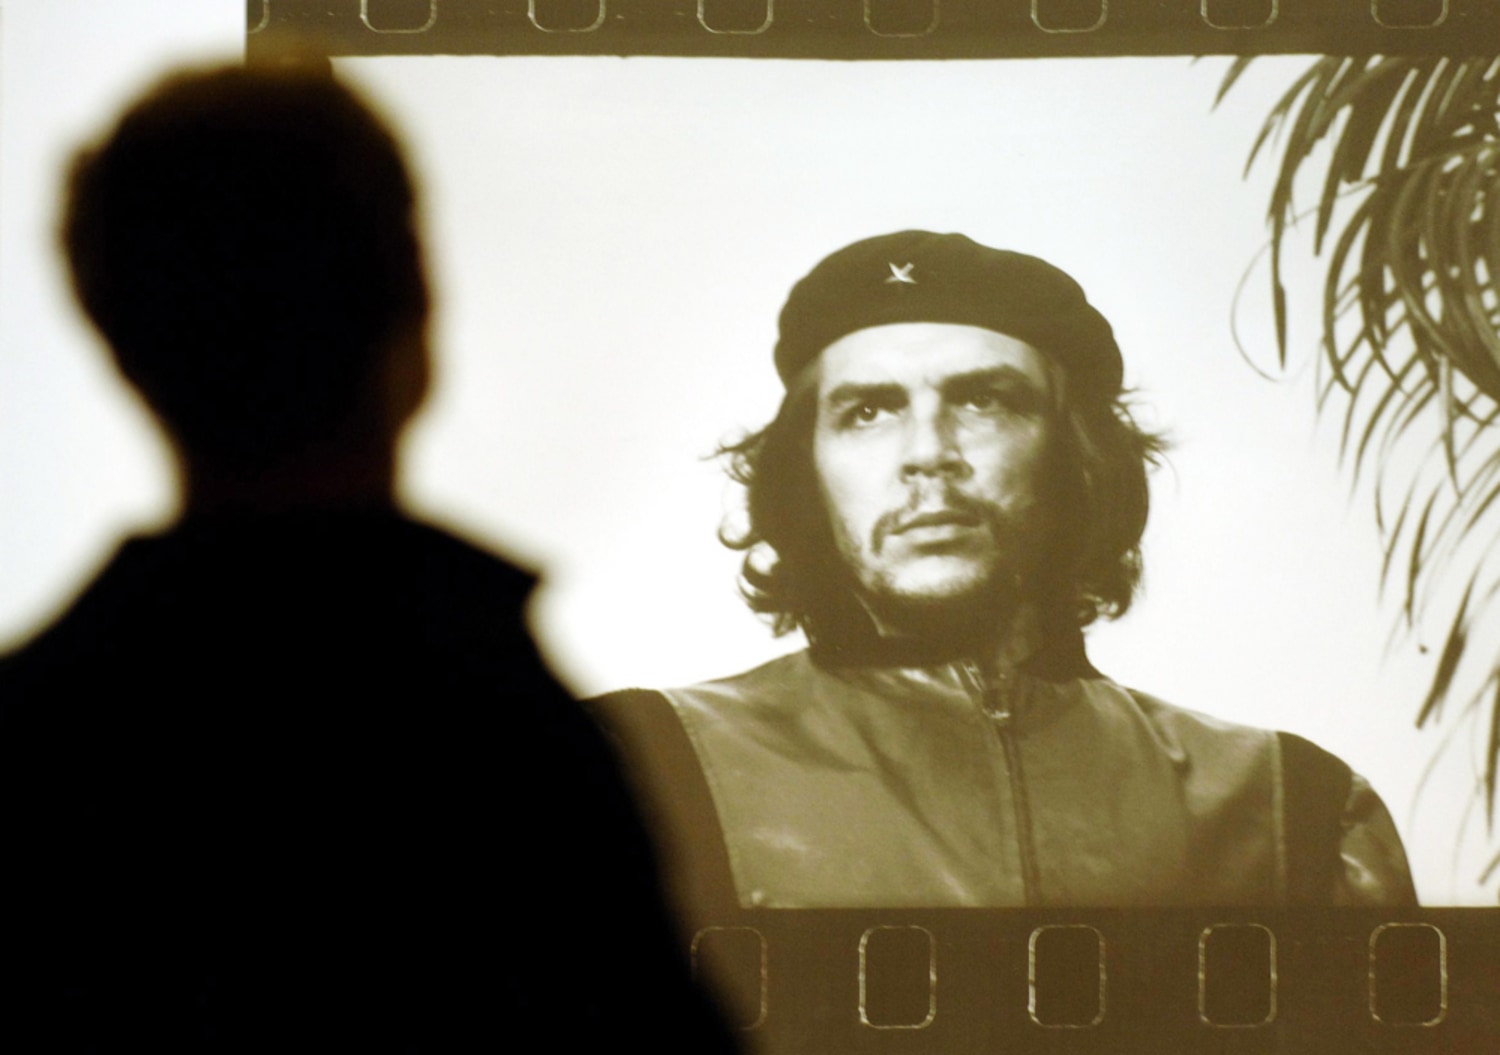 Vintage 90s Che Guevara Rebel Revolutionist Icon Hand Print T